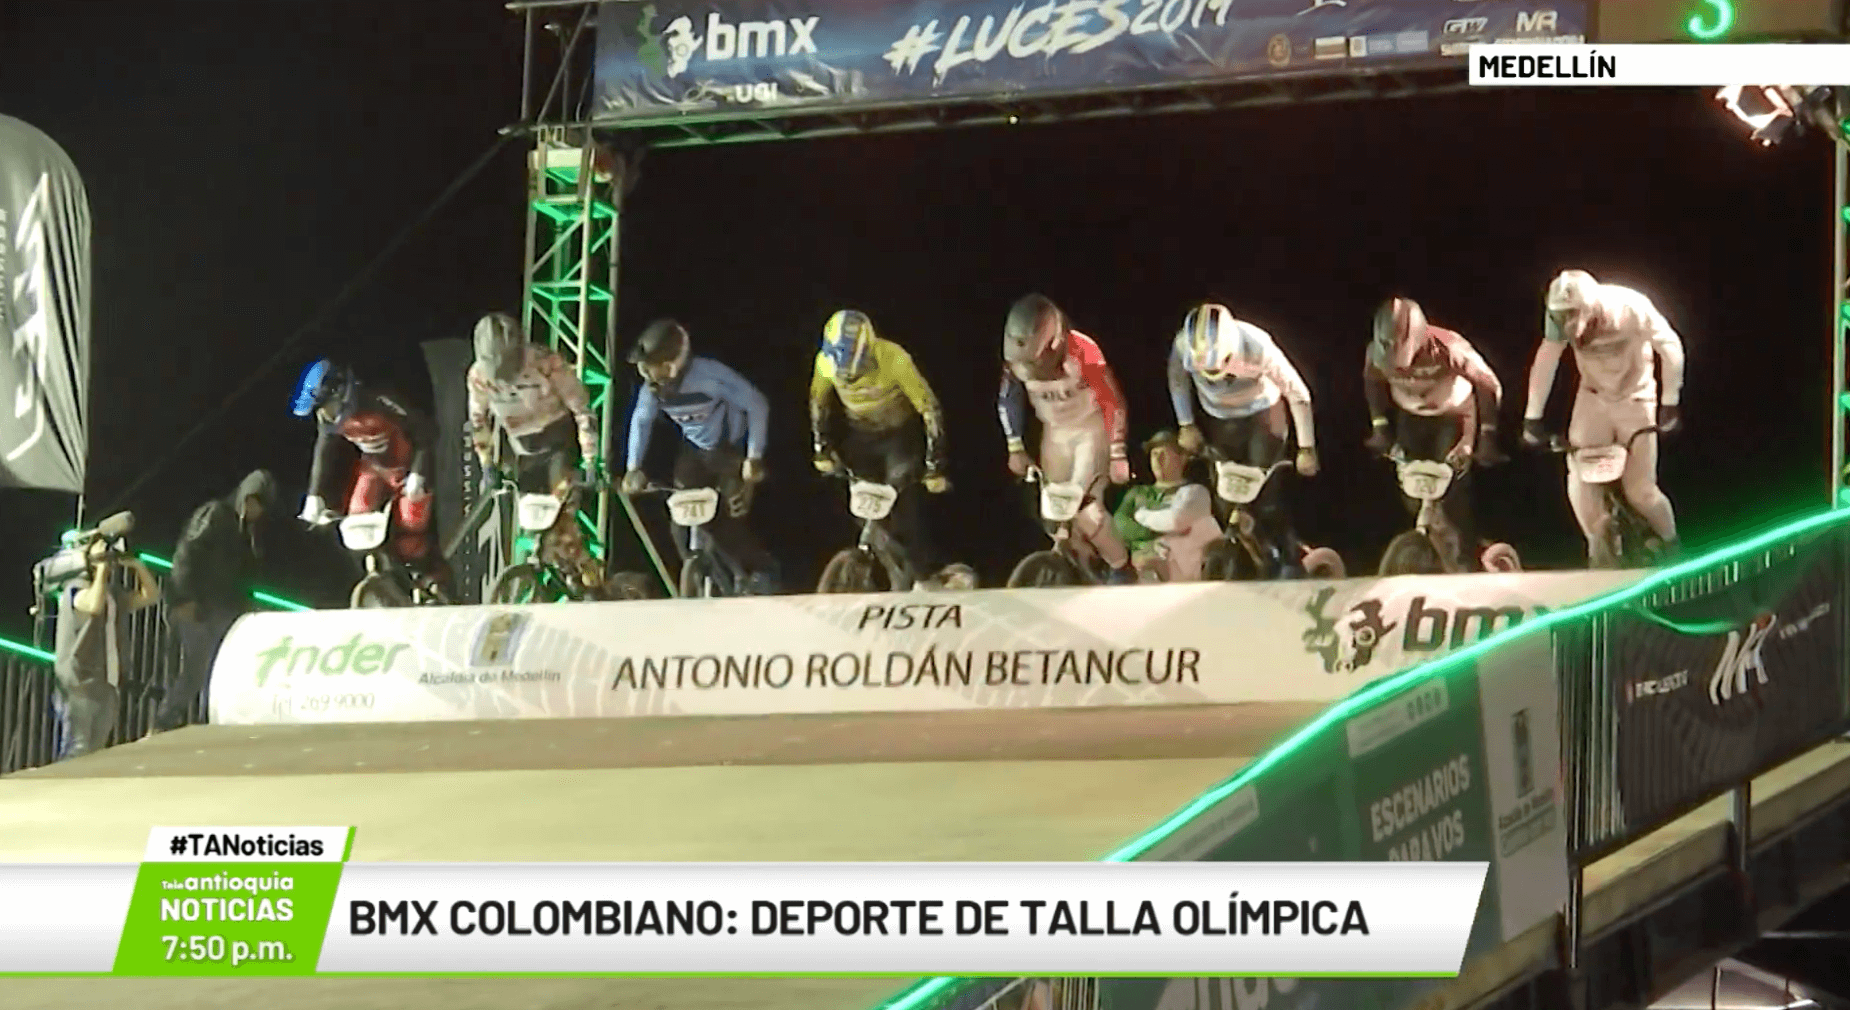 BMX Colombiano: deporte de talla olímpica